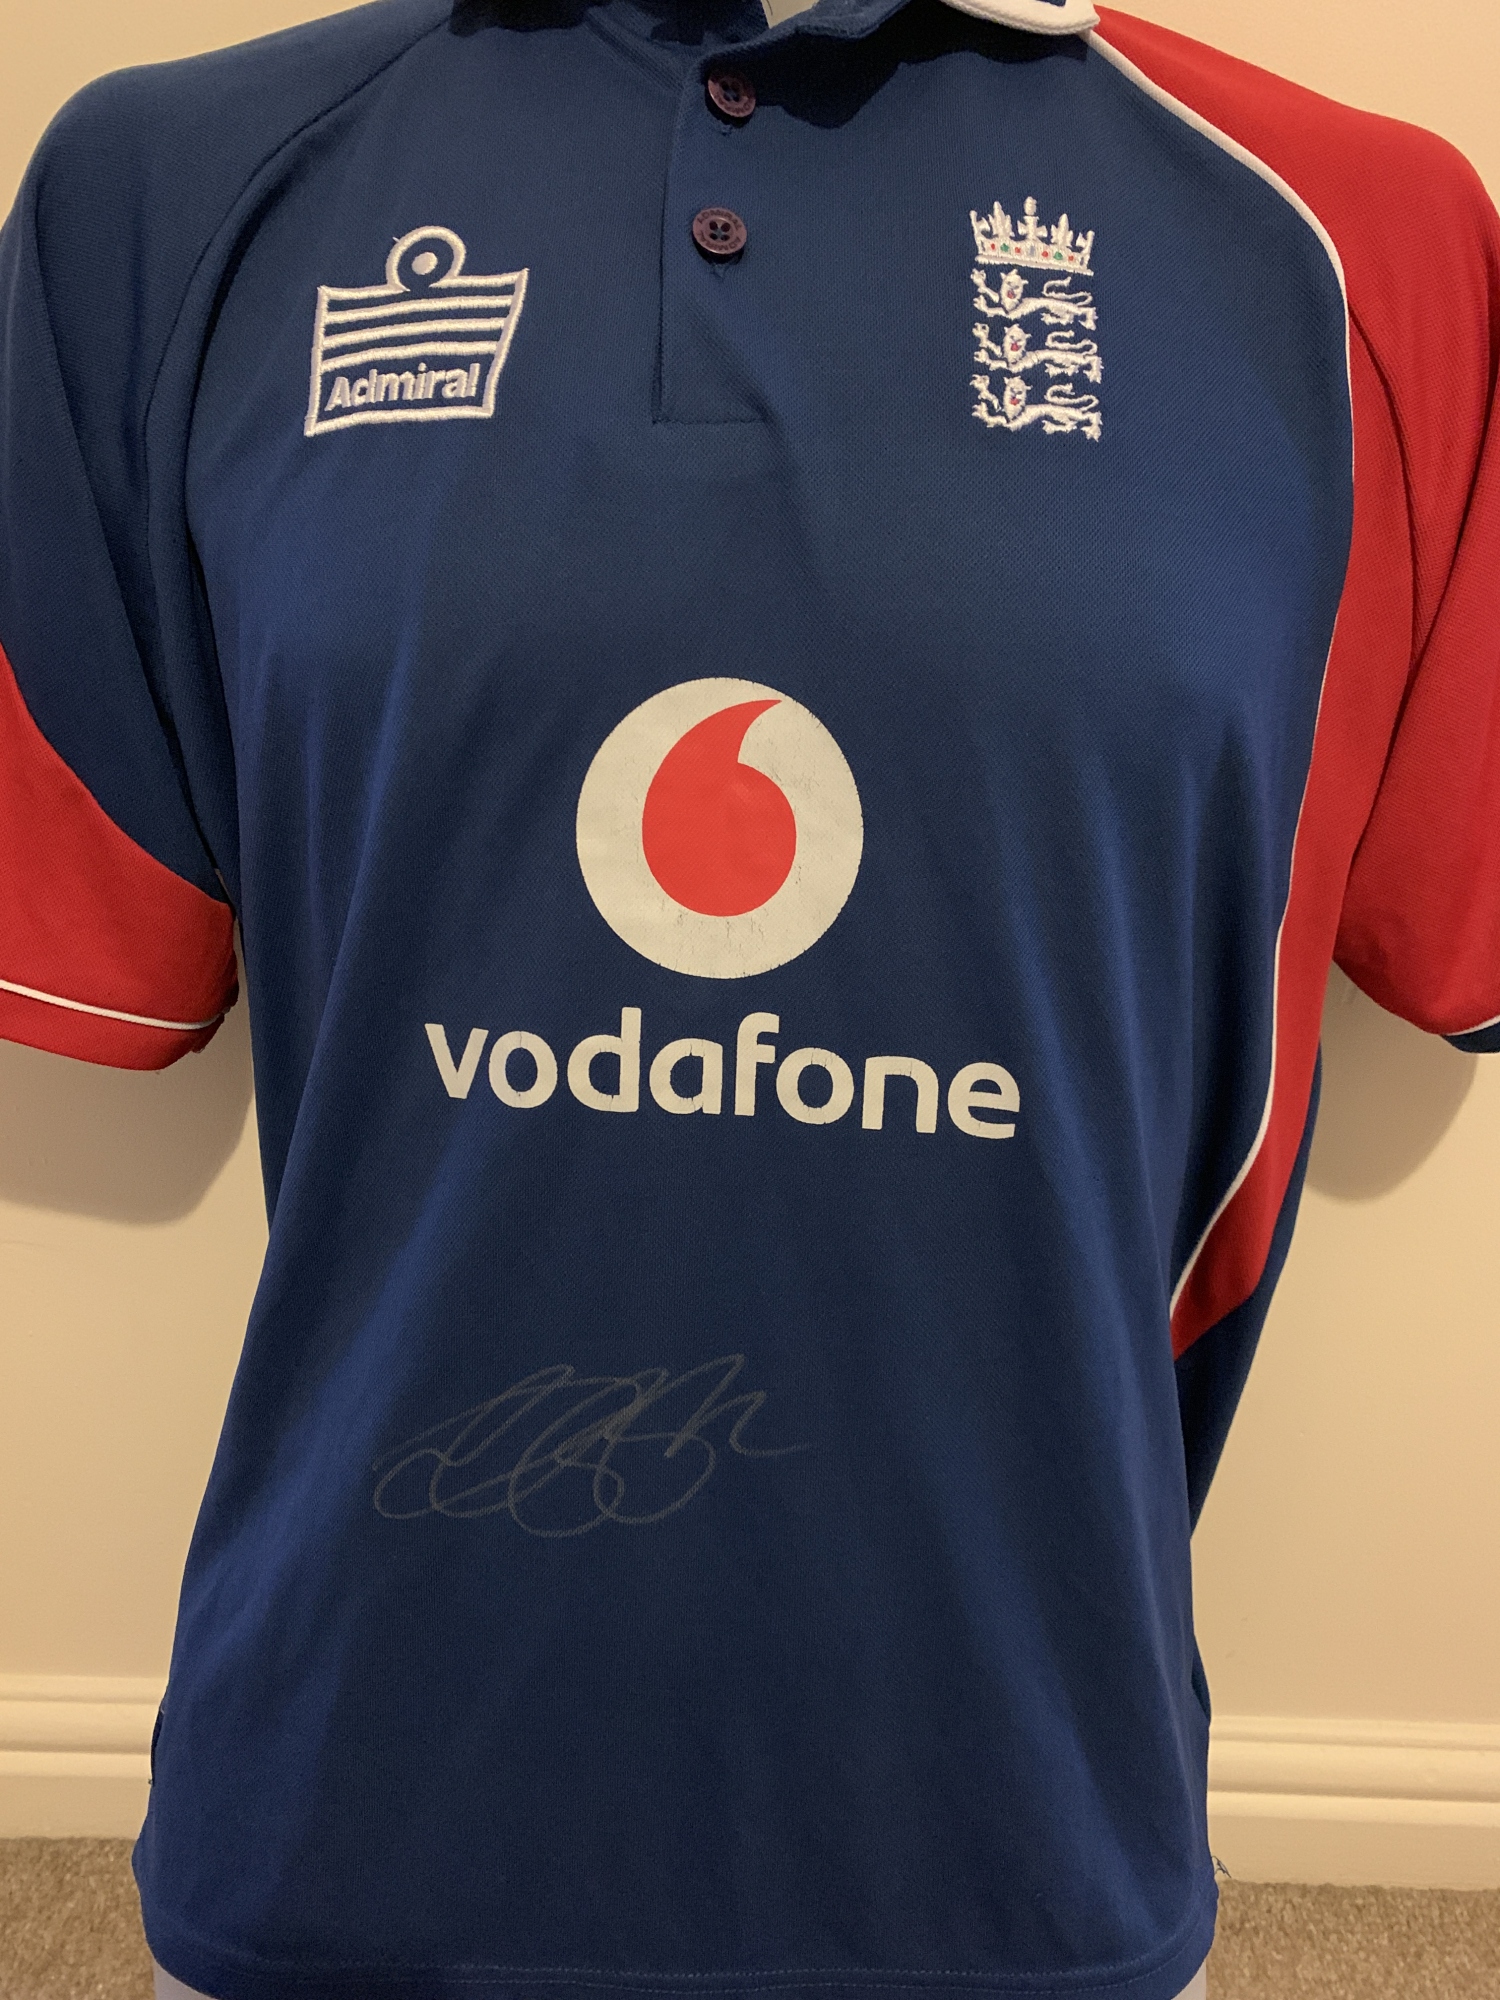 admiral england cricket shirt